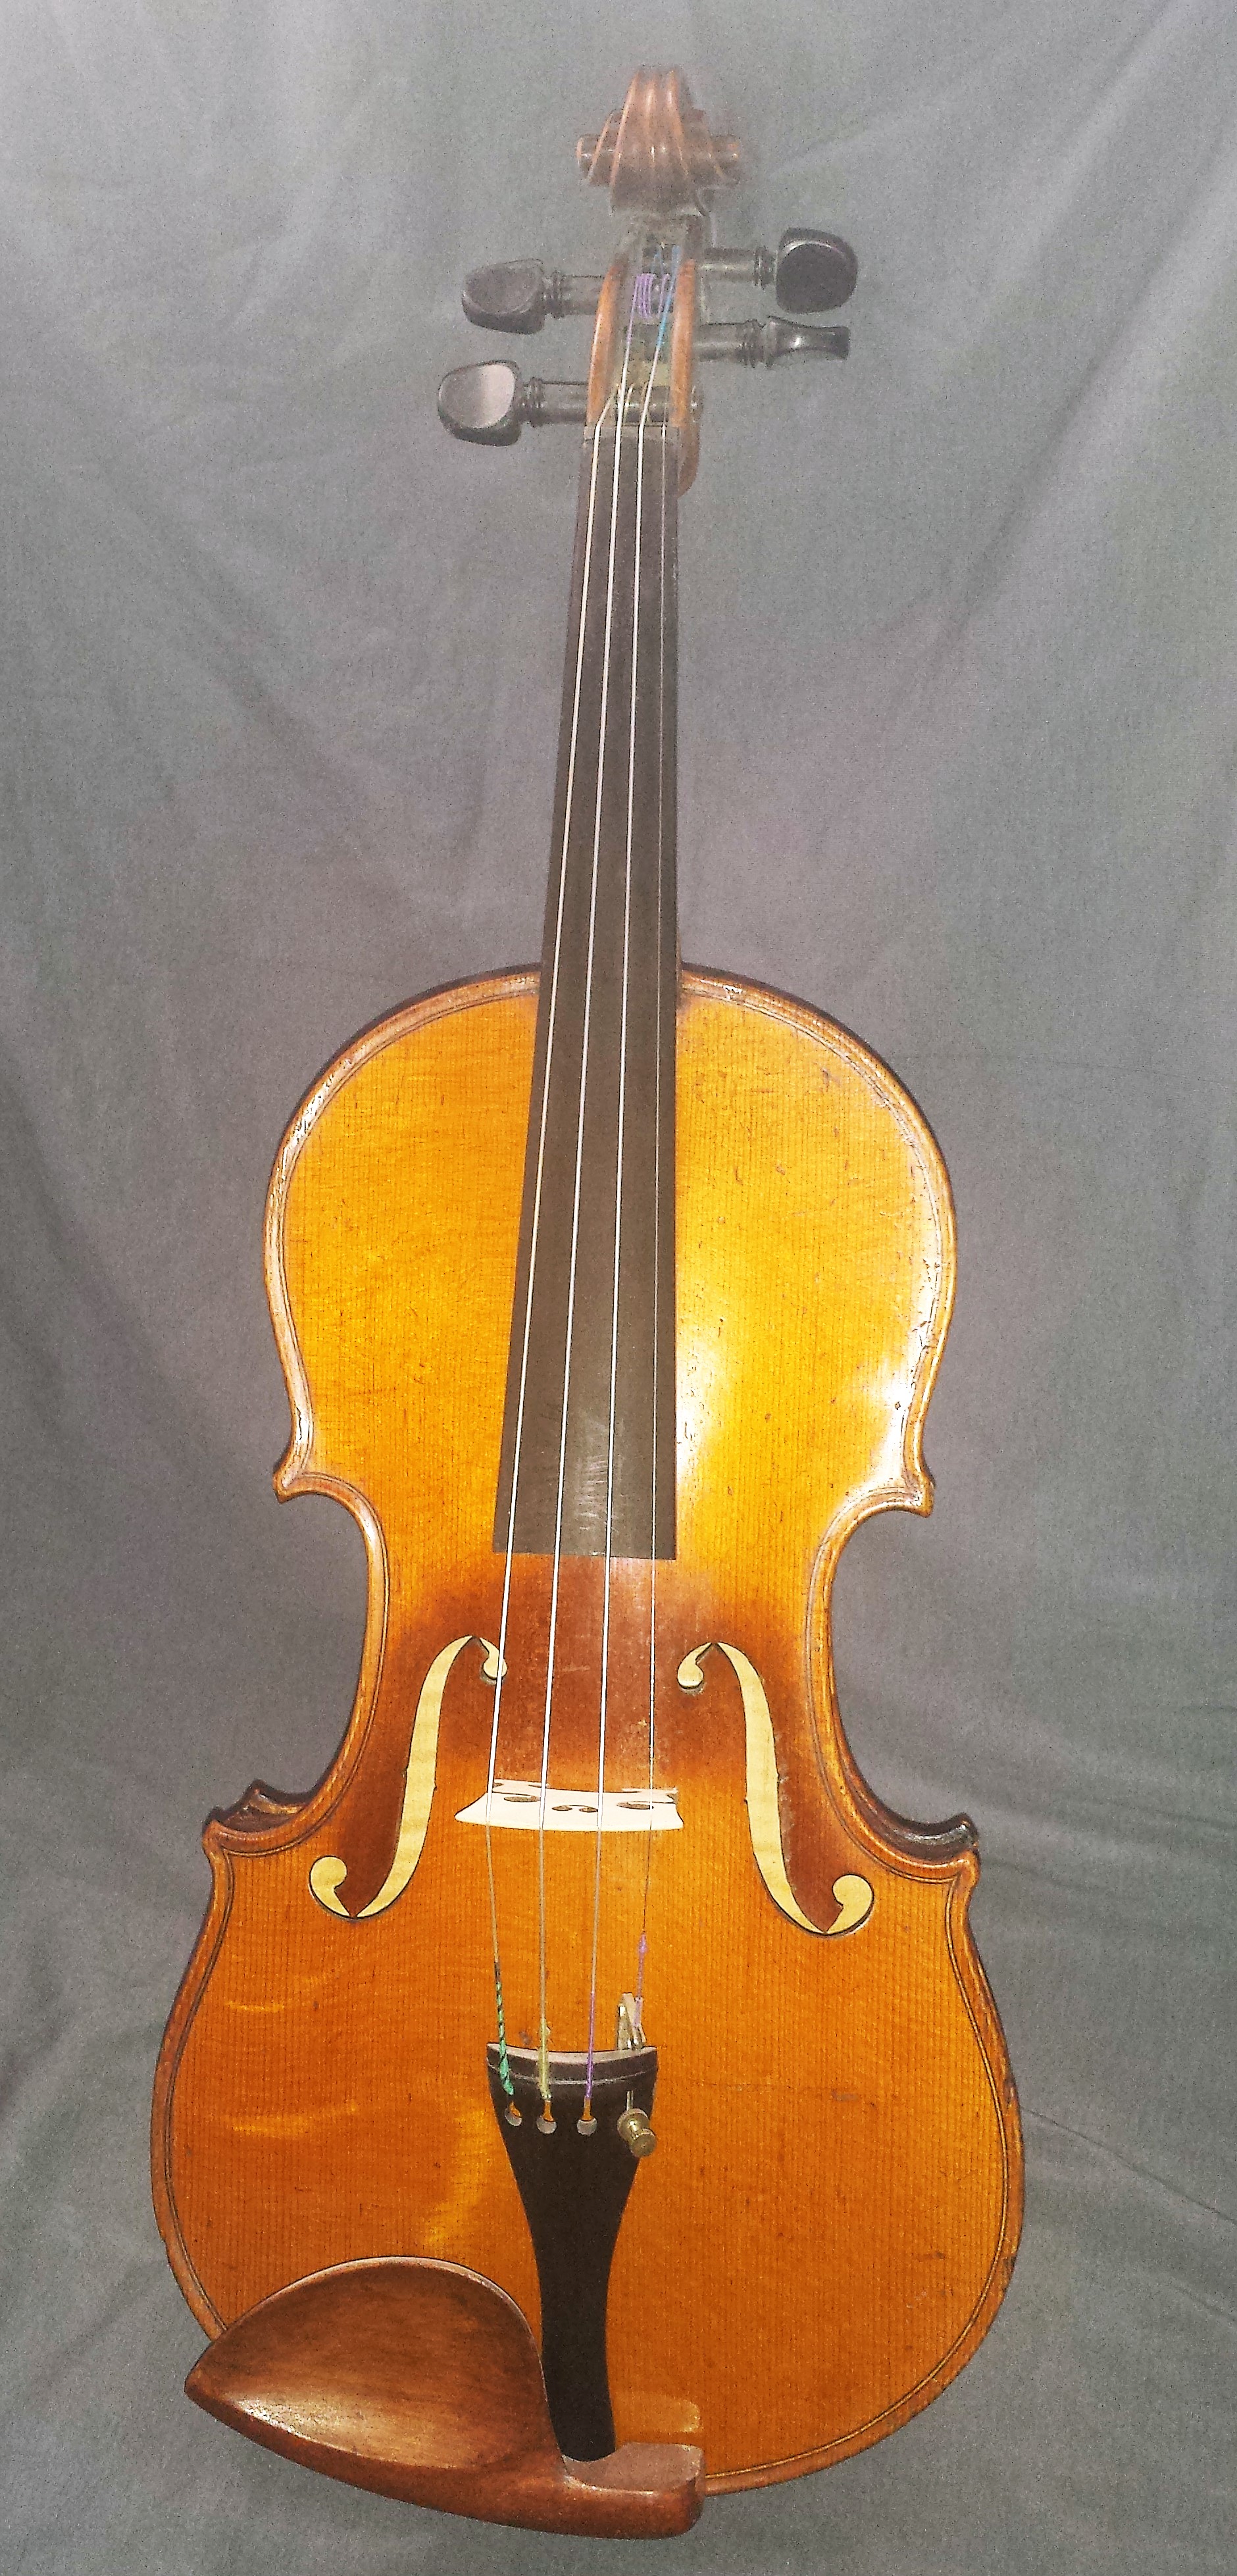 mental Shipley grado Luthier Frances Violin Antiguo 1900 Natural Transparente Bowed Instrument  For Sale